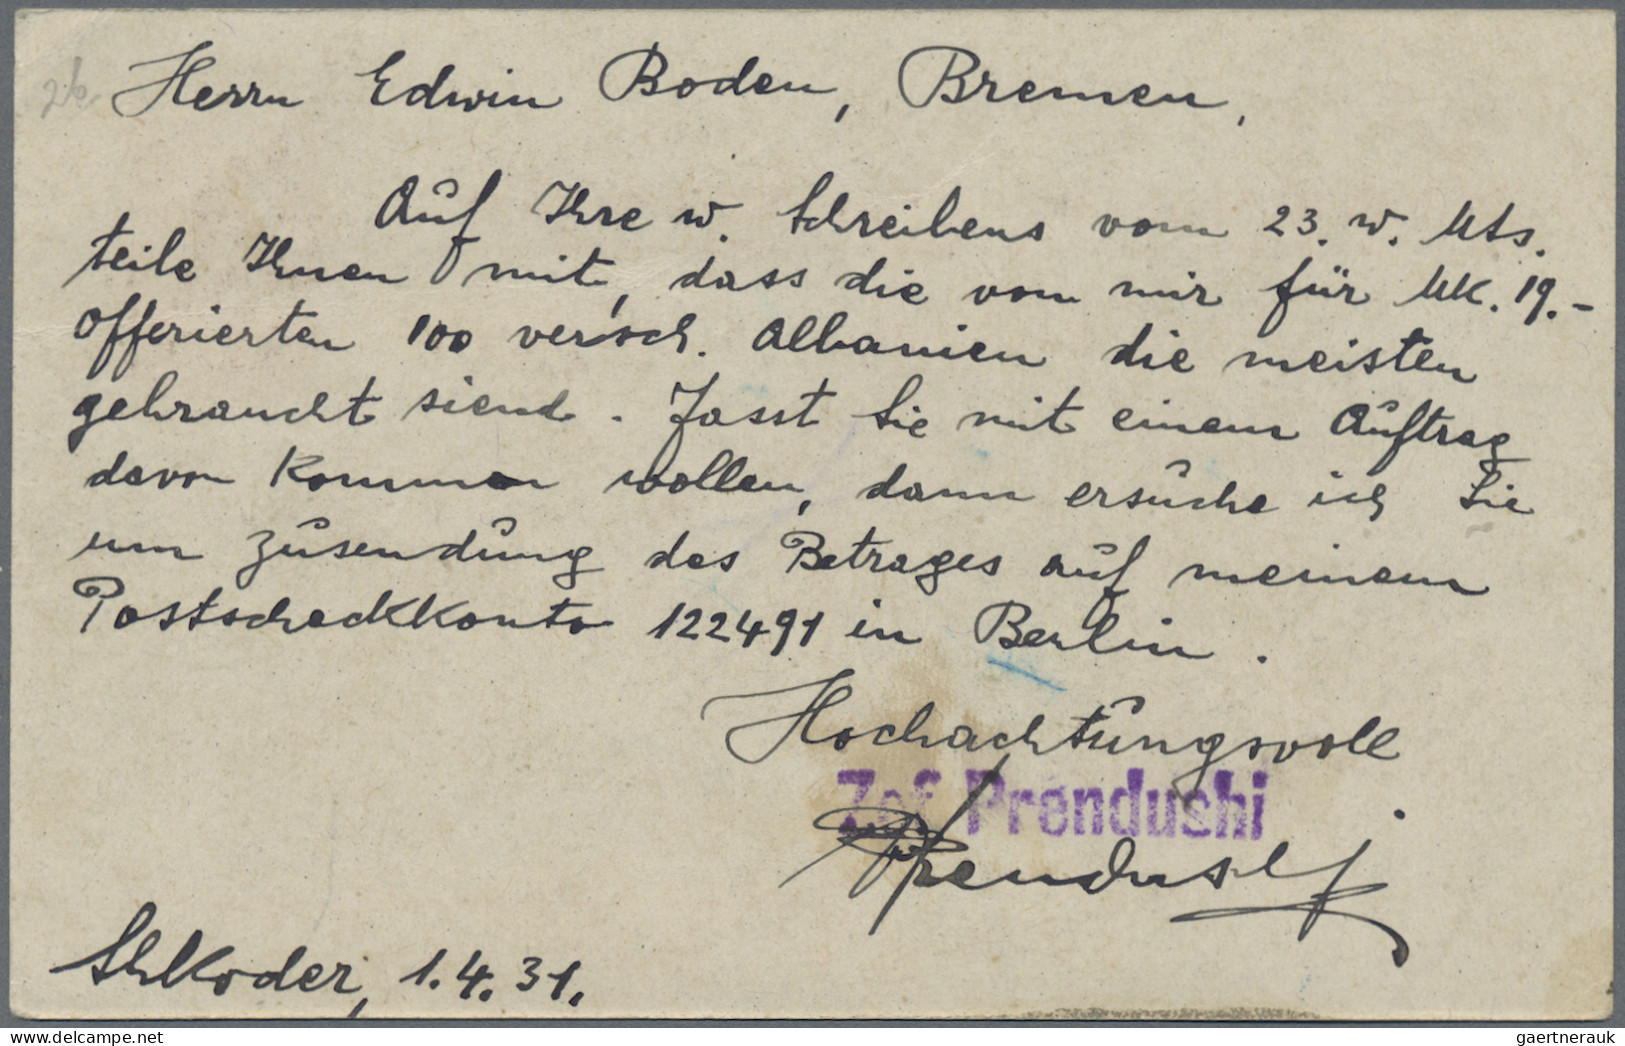 Albania - Postal Stationery: 1926/1937, Three Commercially Used Stationery Cards - Albania